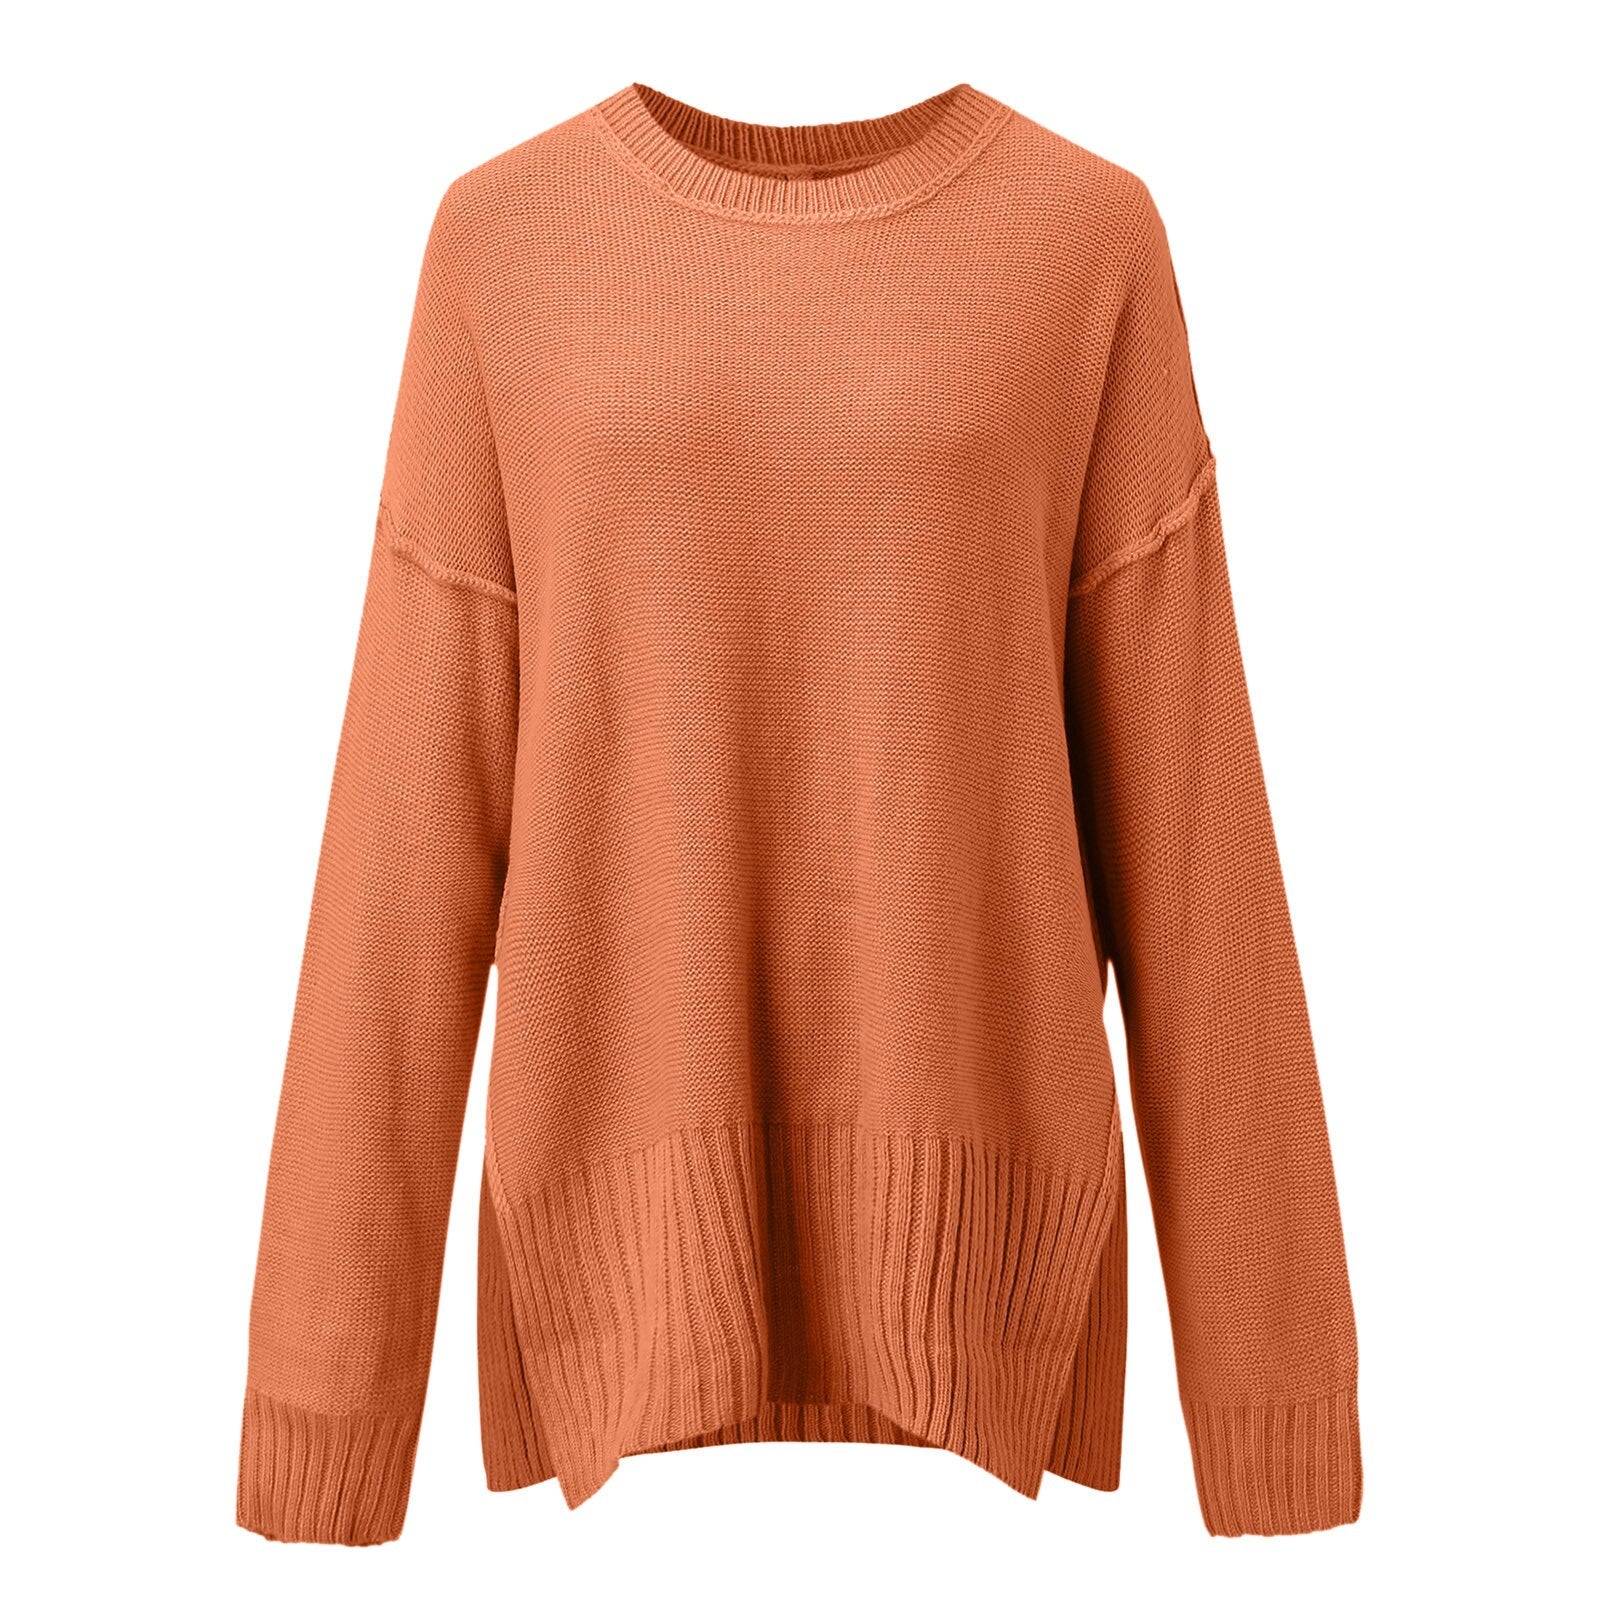 Black Friday Sales Women's Fashion Crewneck Sweater Oversize Vintage Autumn Solid Color Long Sleeve Side Slit Loose Knit Pullover Jumper Tunic Tops